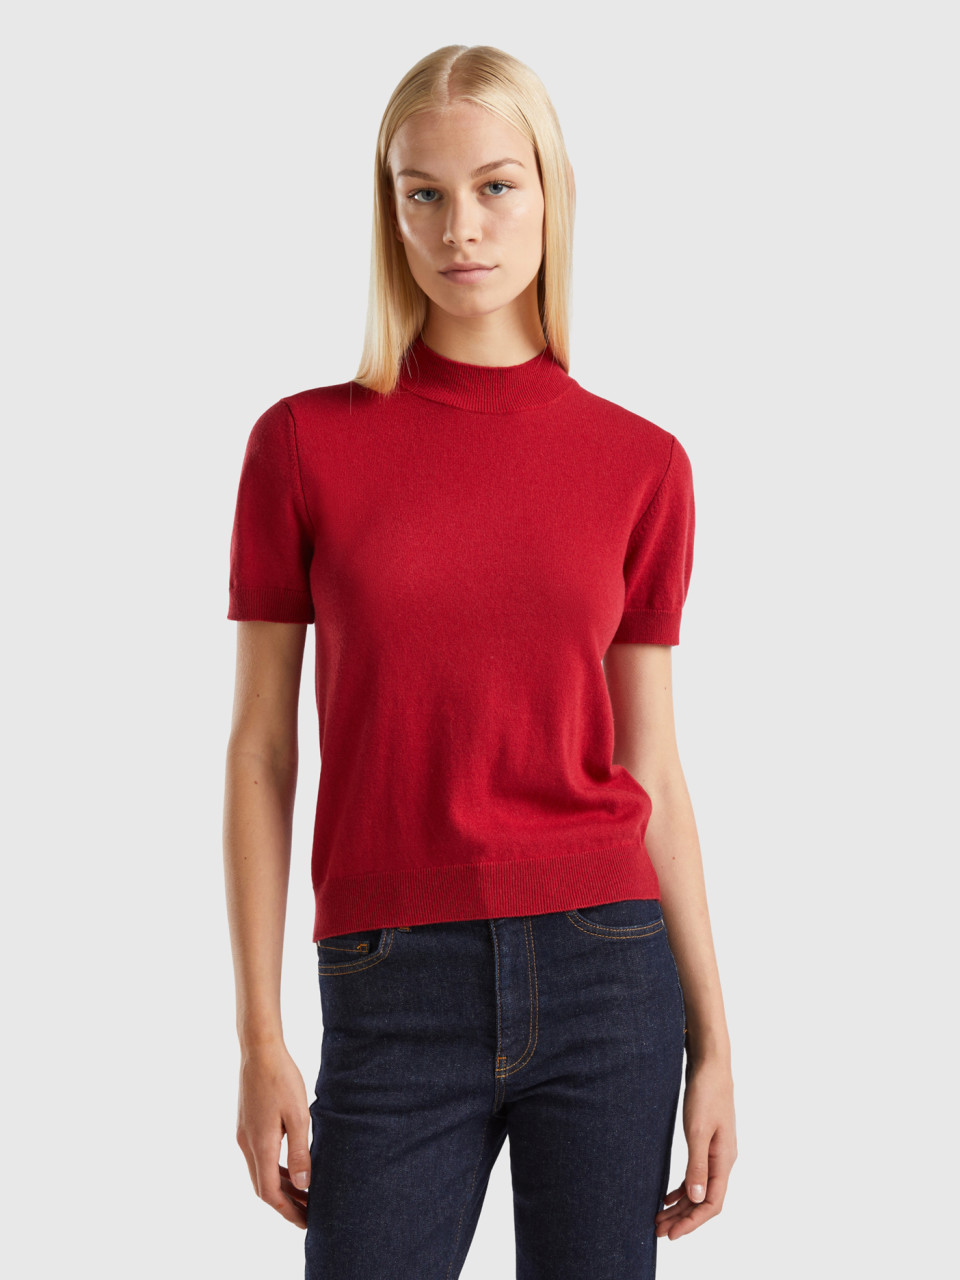 Benetton, Brick Red Short Sleeve Sweater In Cashmere Blend, Brick Red, Women